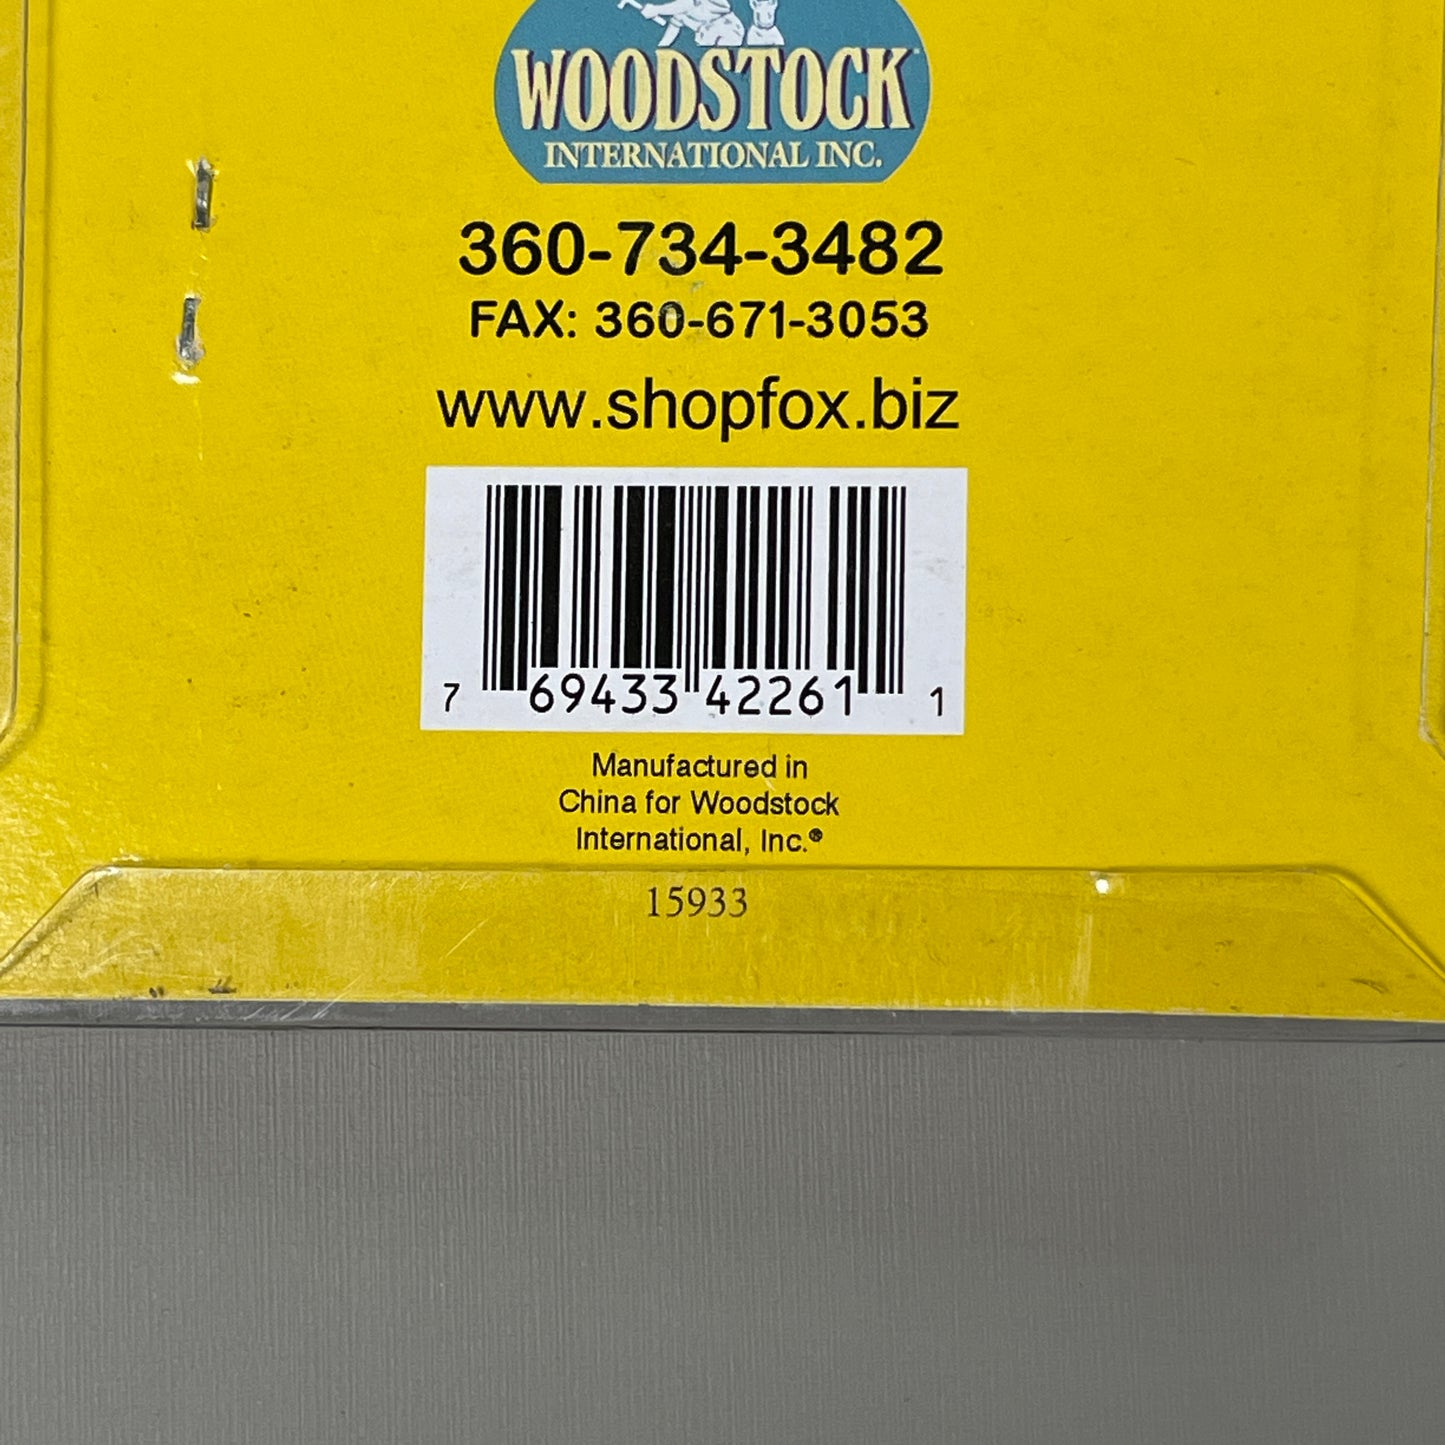 WOODSTOCK SteeleX Pin Punch Set 5 Pc D2261 (New)